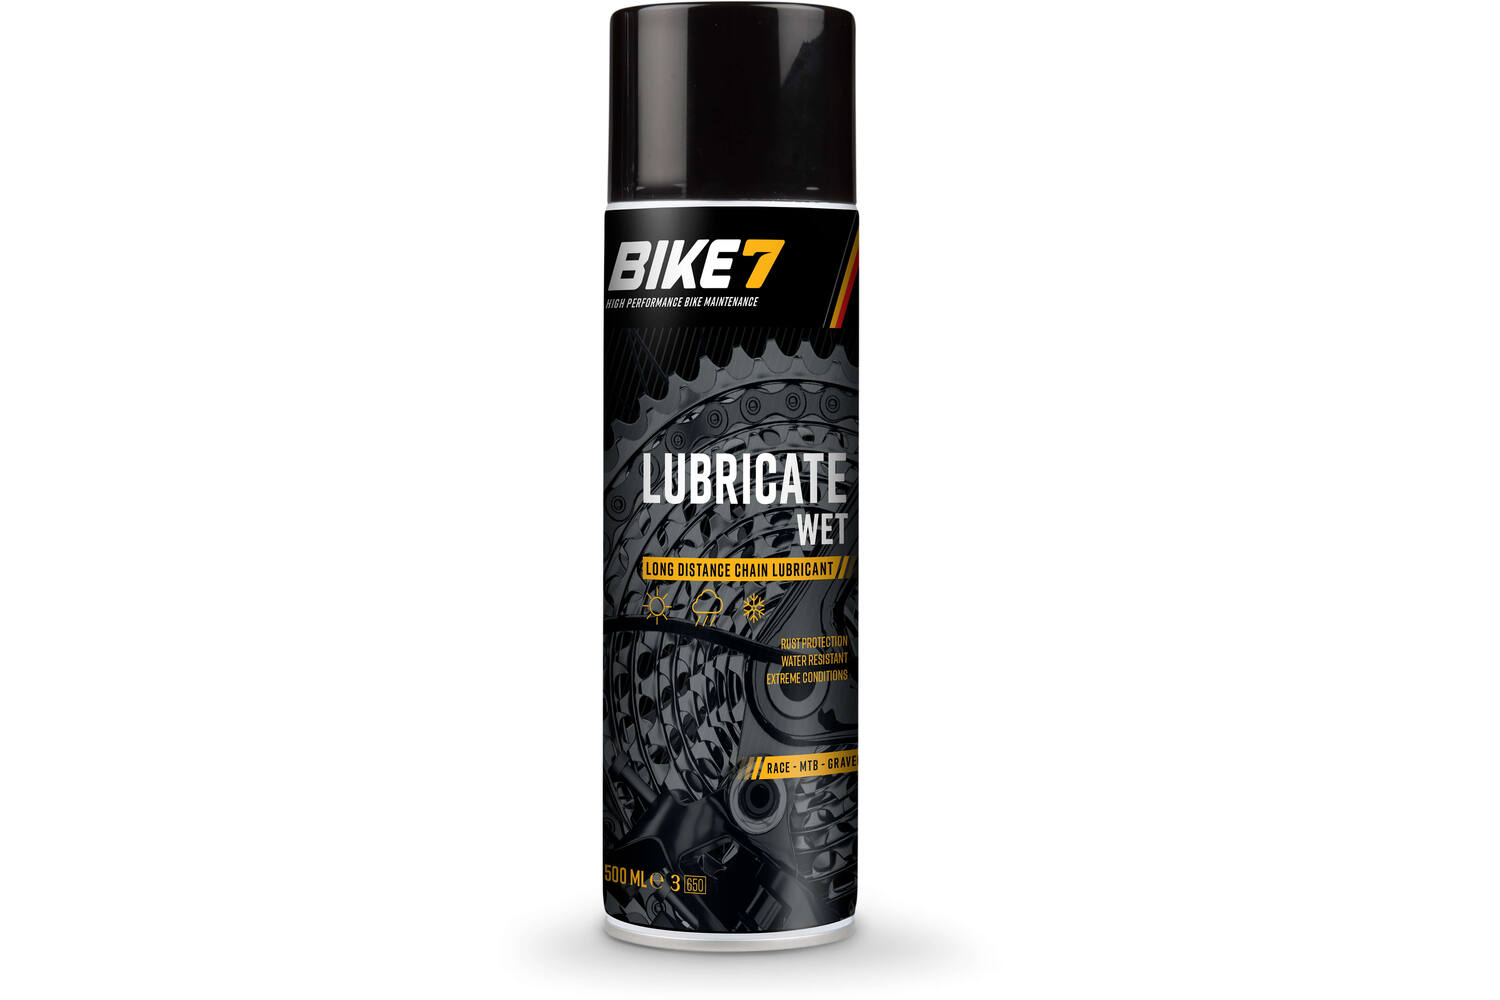 Bike7 lubricate wet 500ml